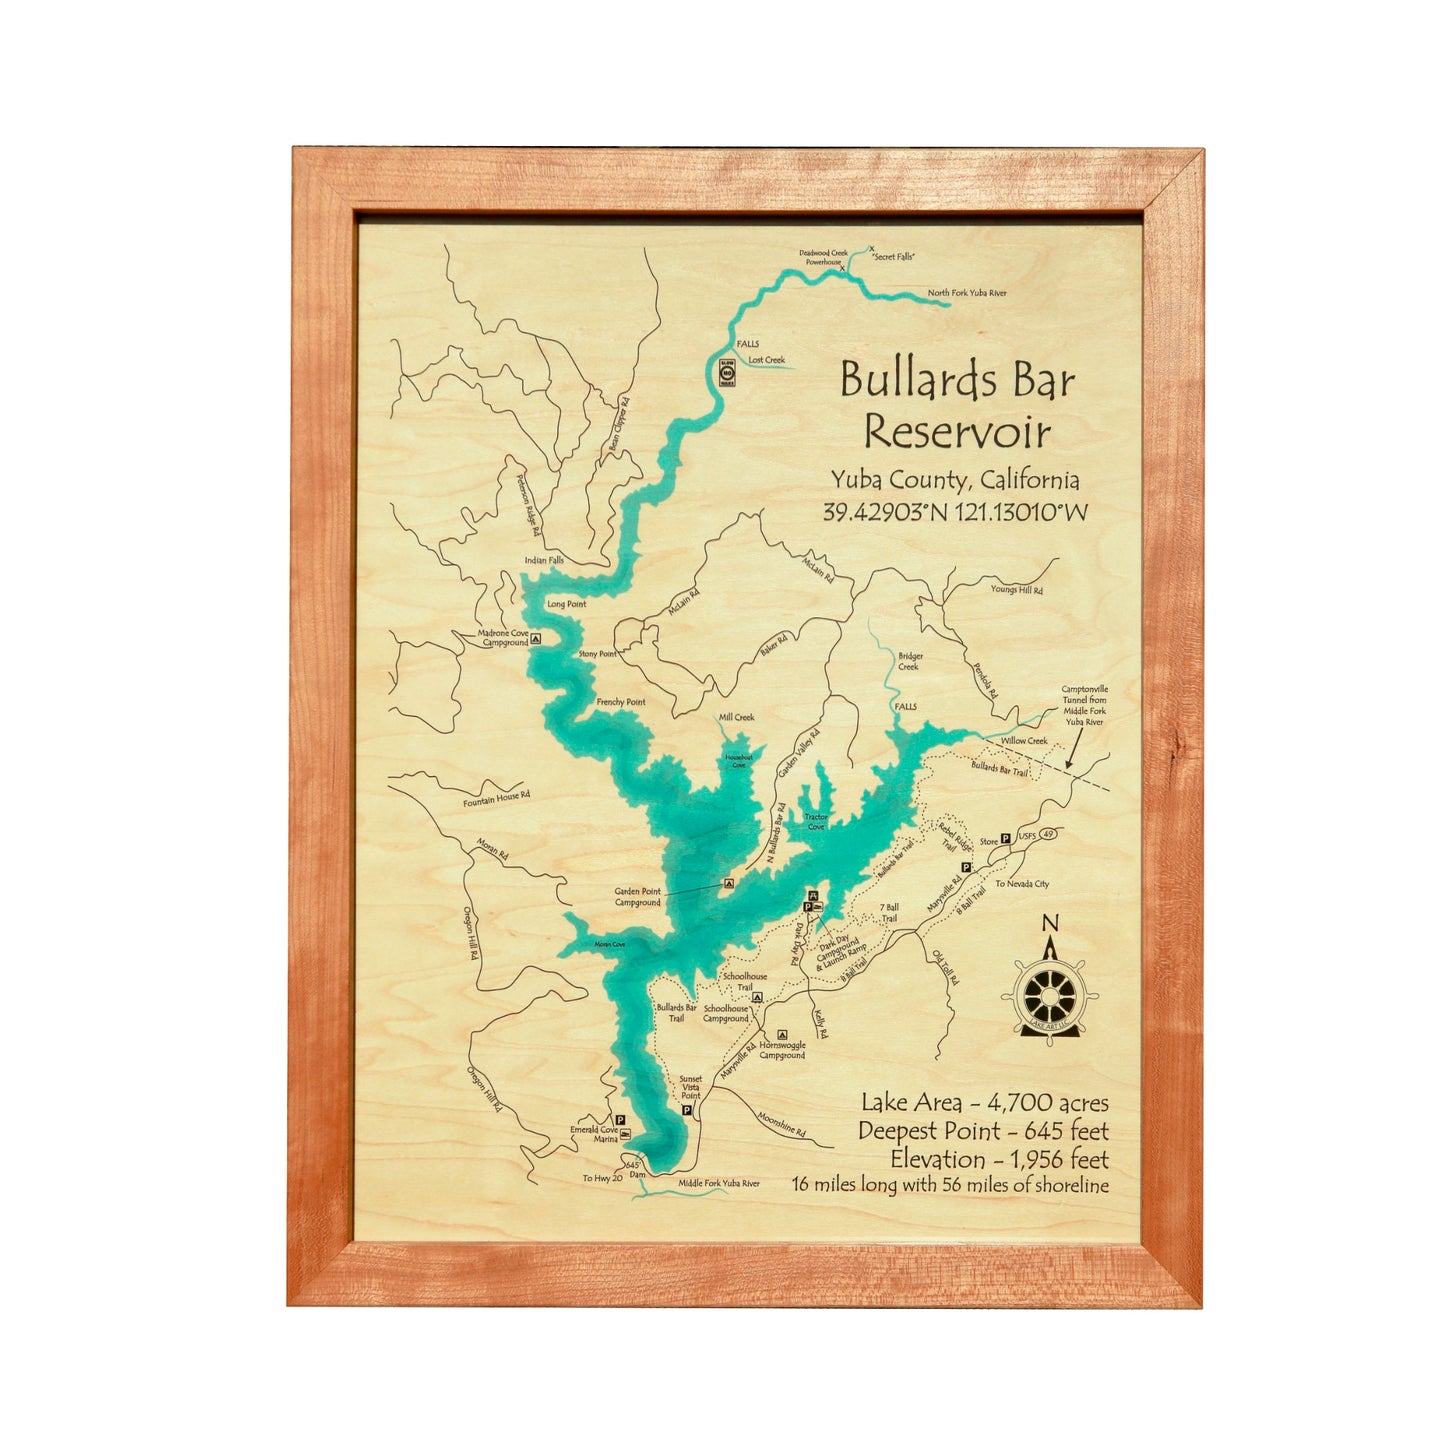 Bullards Bar Lake Map Framed Picture